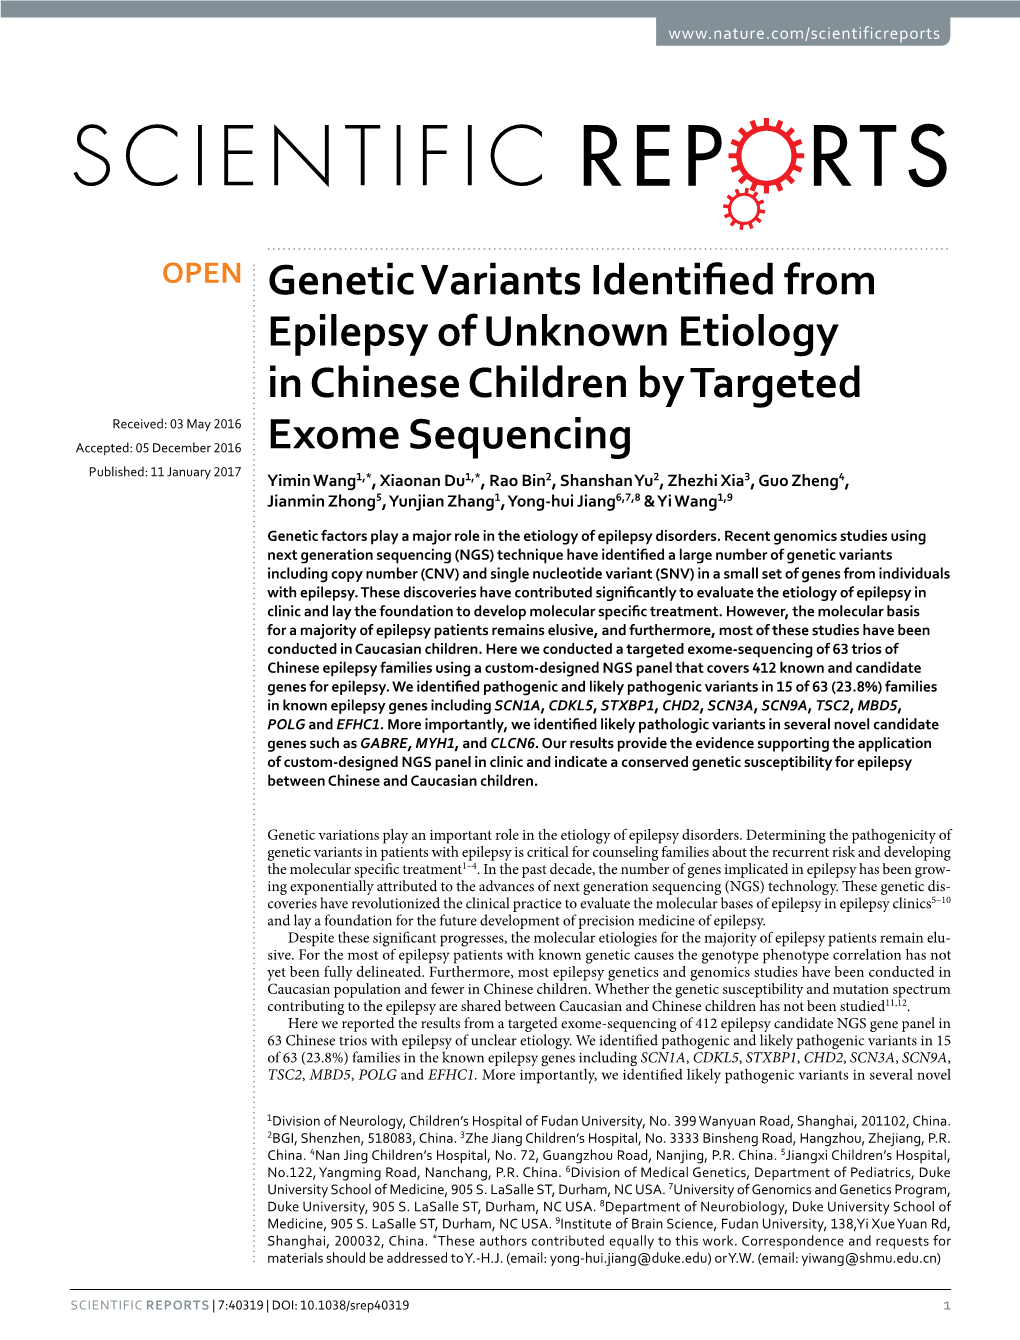 Genetic Variants Identified from Epilepsy of Unknown Etiology In